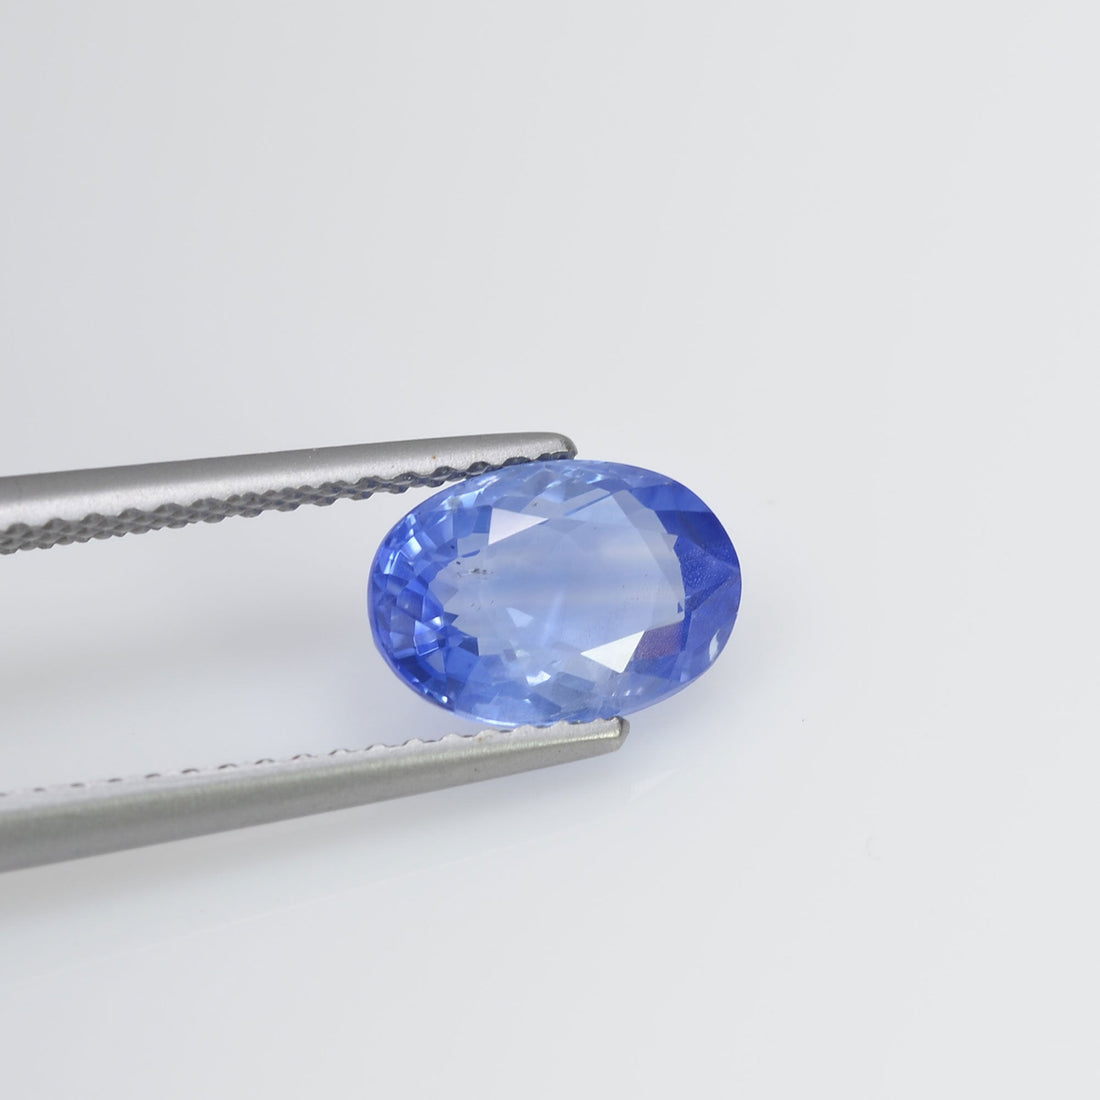 2.09 cts Unheated Natural Blue Sapphire Loose Gemstone Oval Cut - Thai Gems Export Ltd.